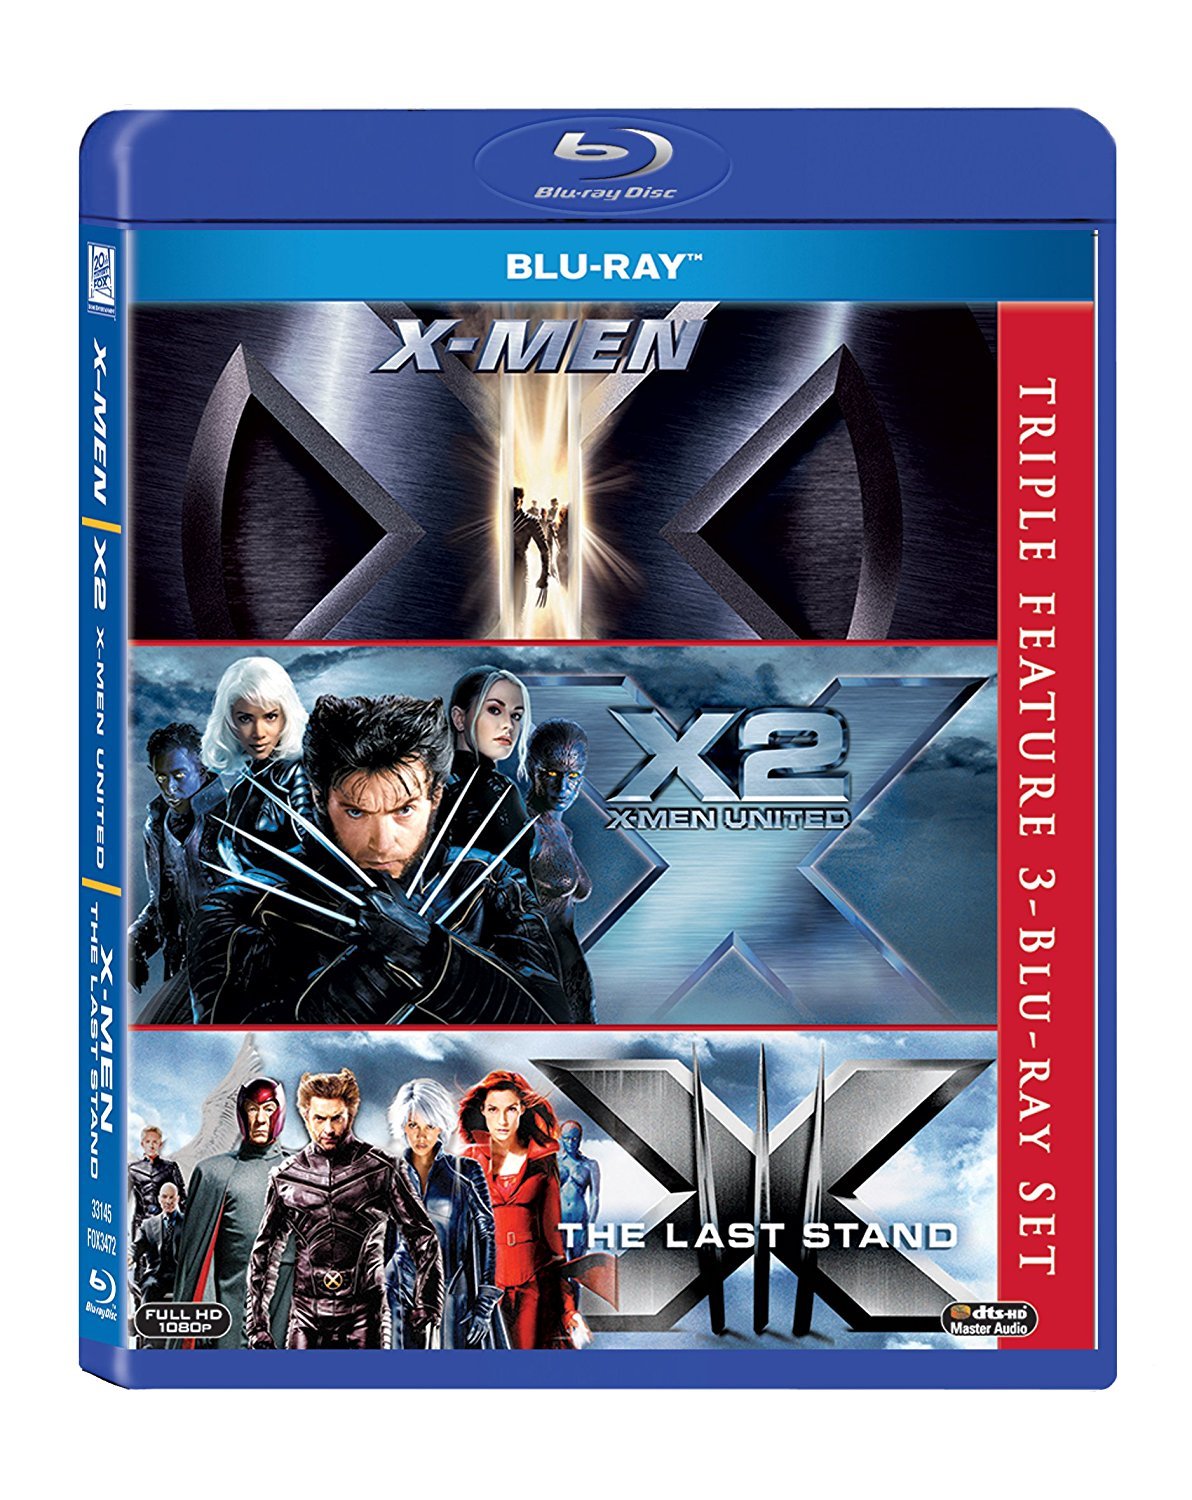 x-men-trilogy-x-men-x-men-united-the-last-stand-3-disc-box-set